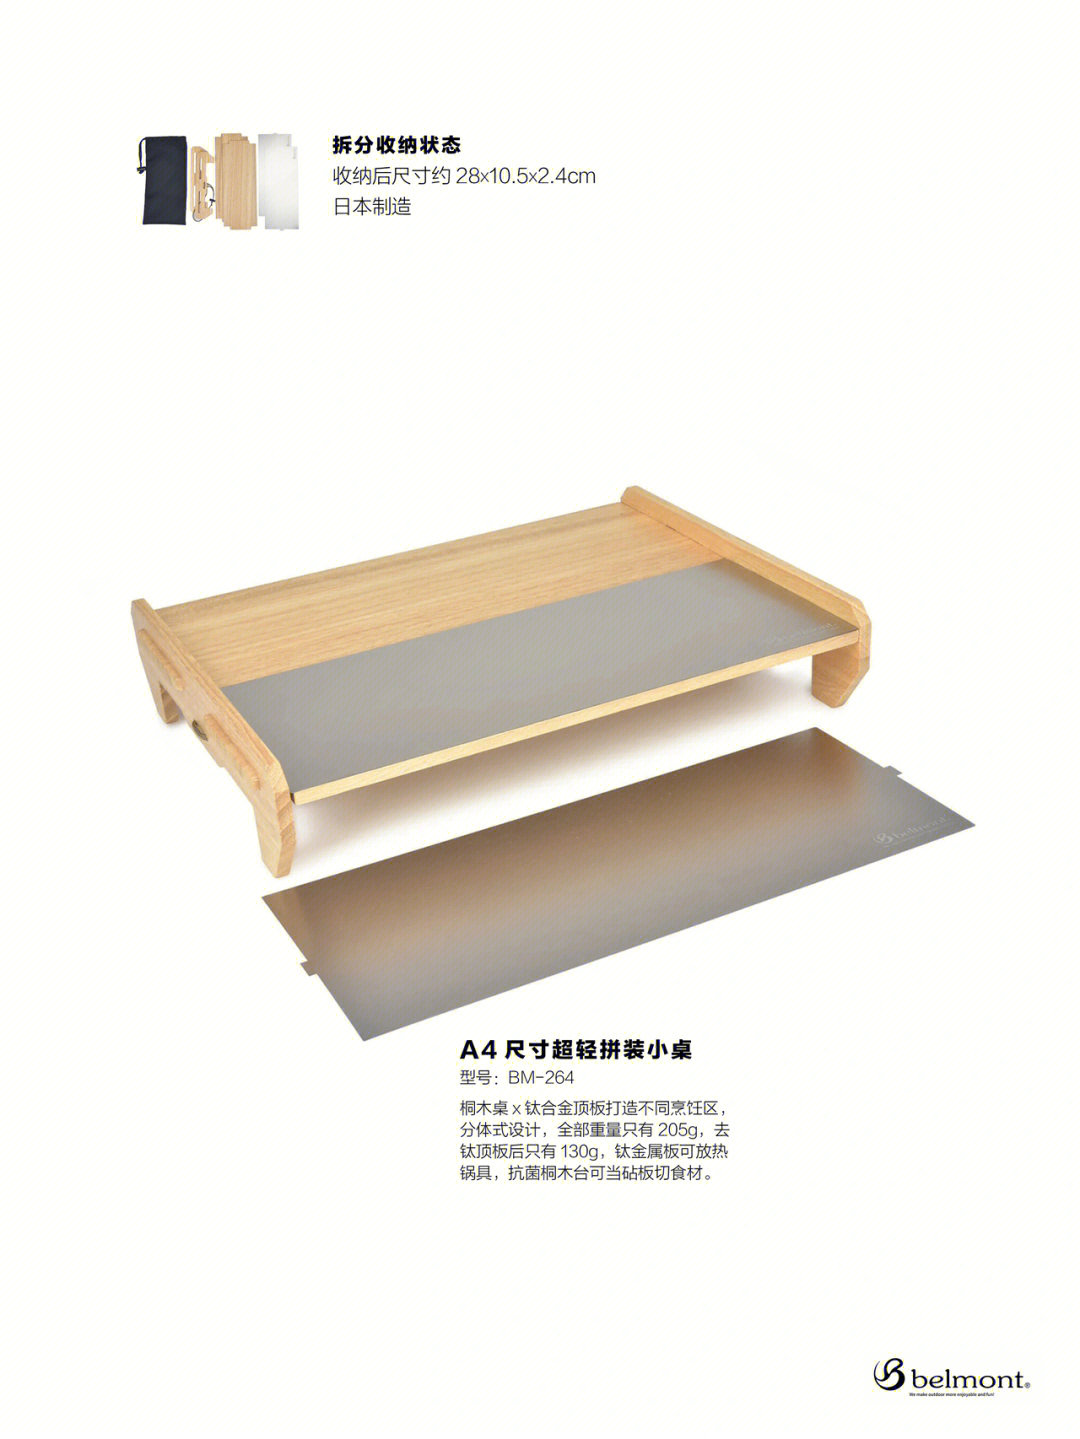 belmont的超轻拼装小桌,采用桐木桌×钛合金顶板设计,全部可拆卸拼装